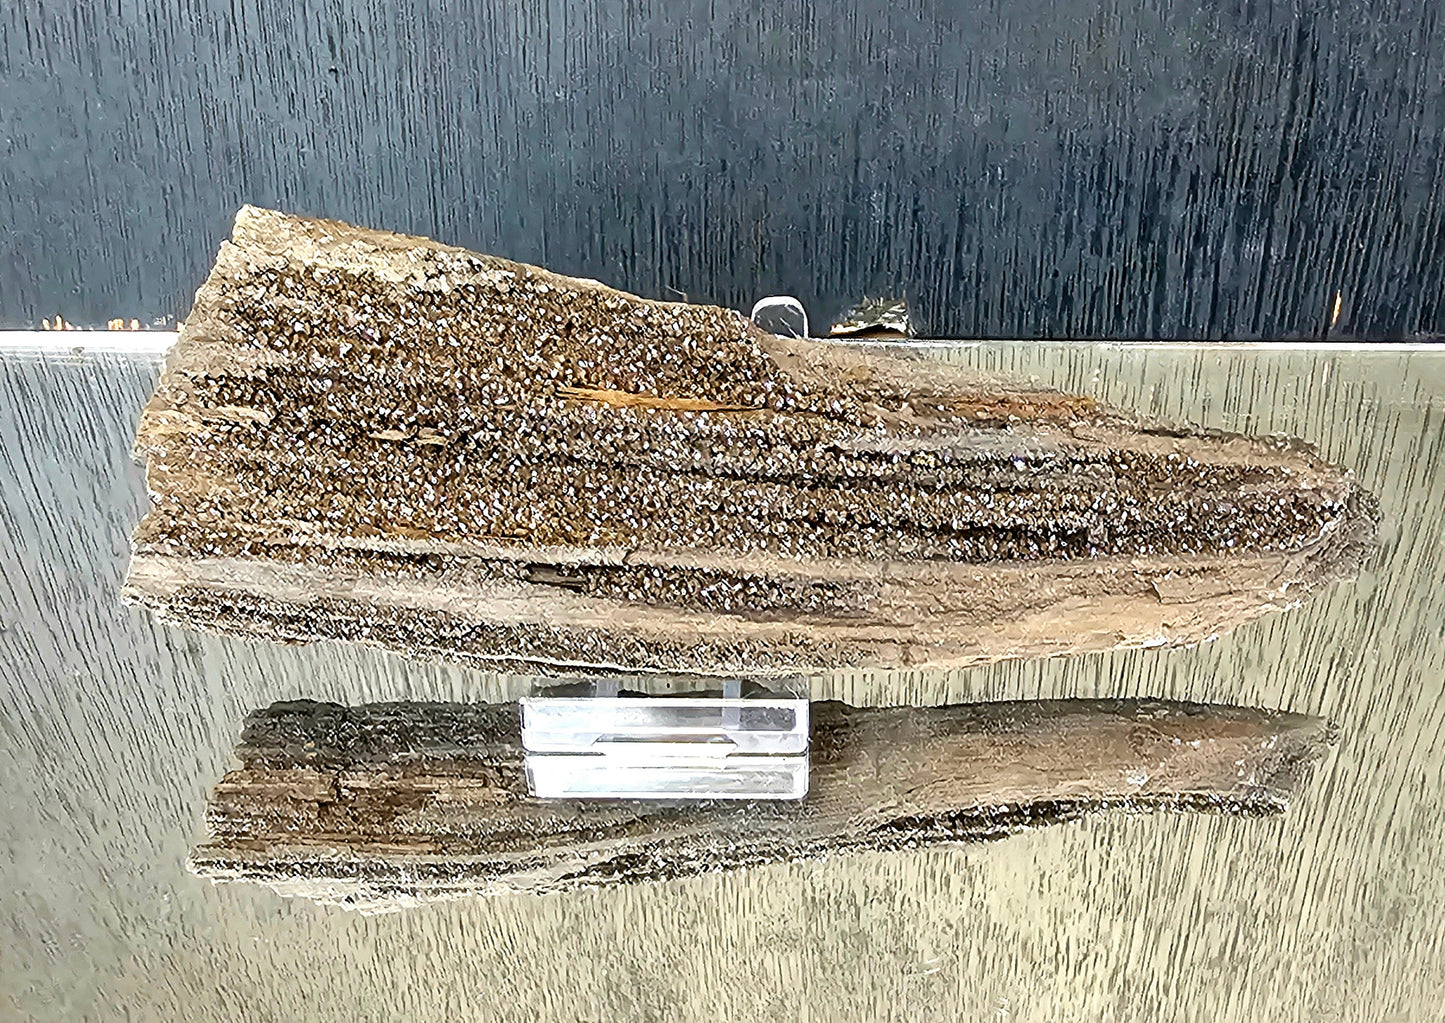 Fossil Wood Quartz Crystal Druze Rare Petrified Wood Germany (#13)